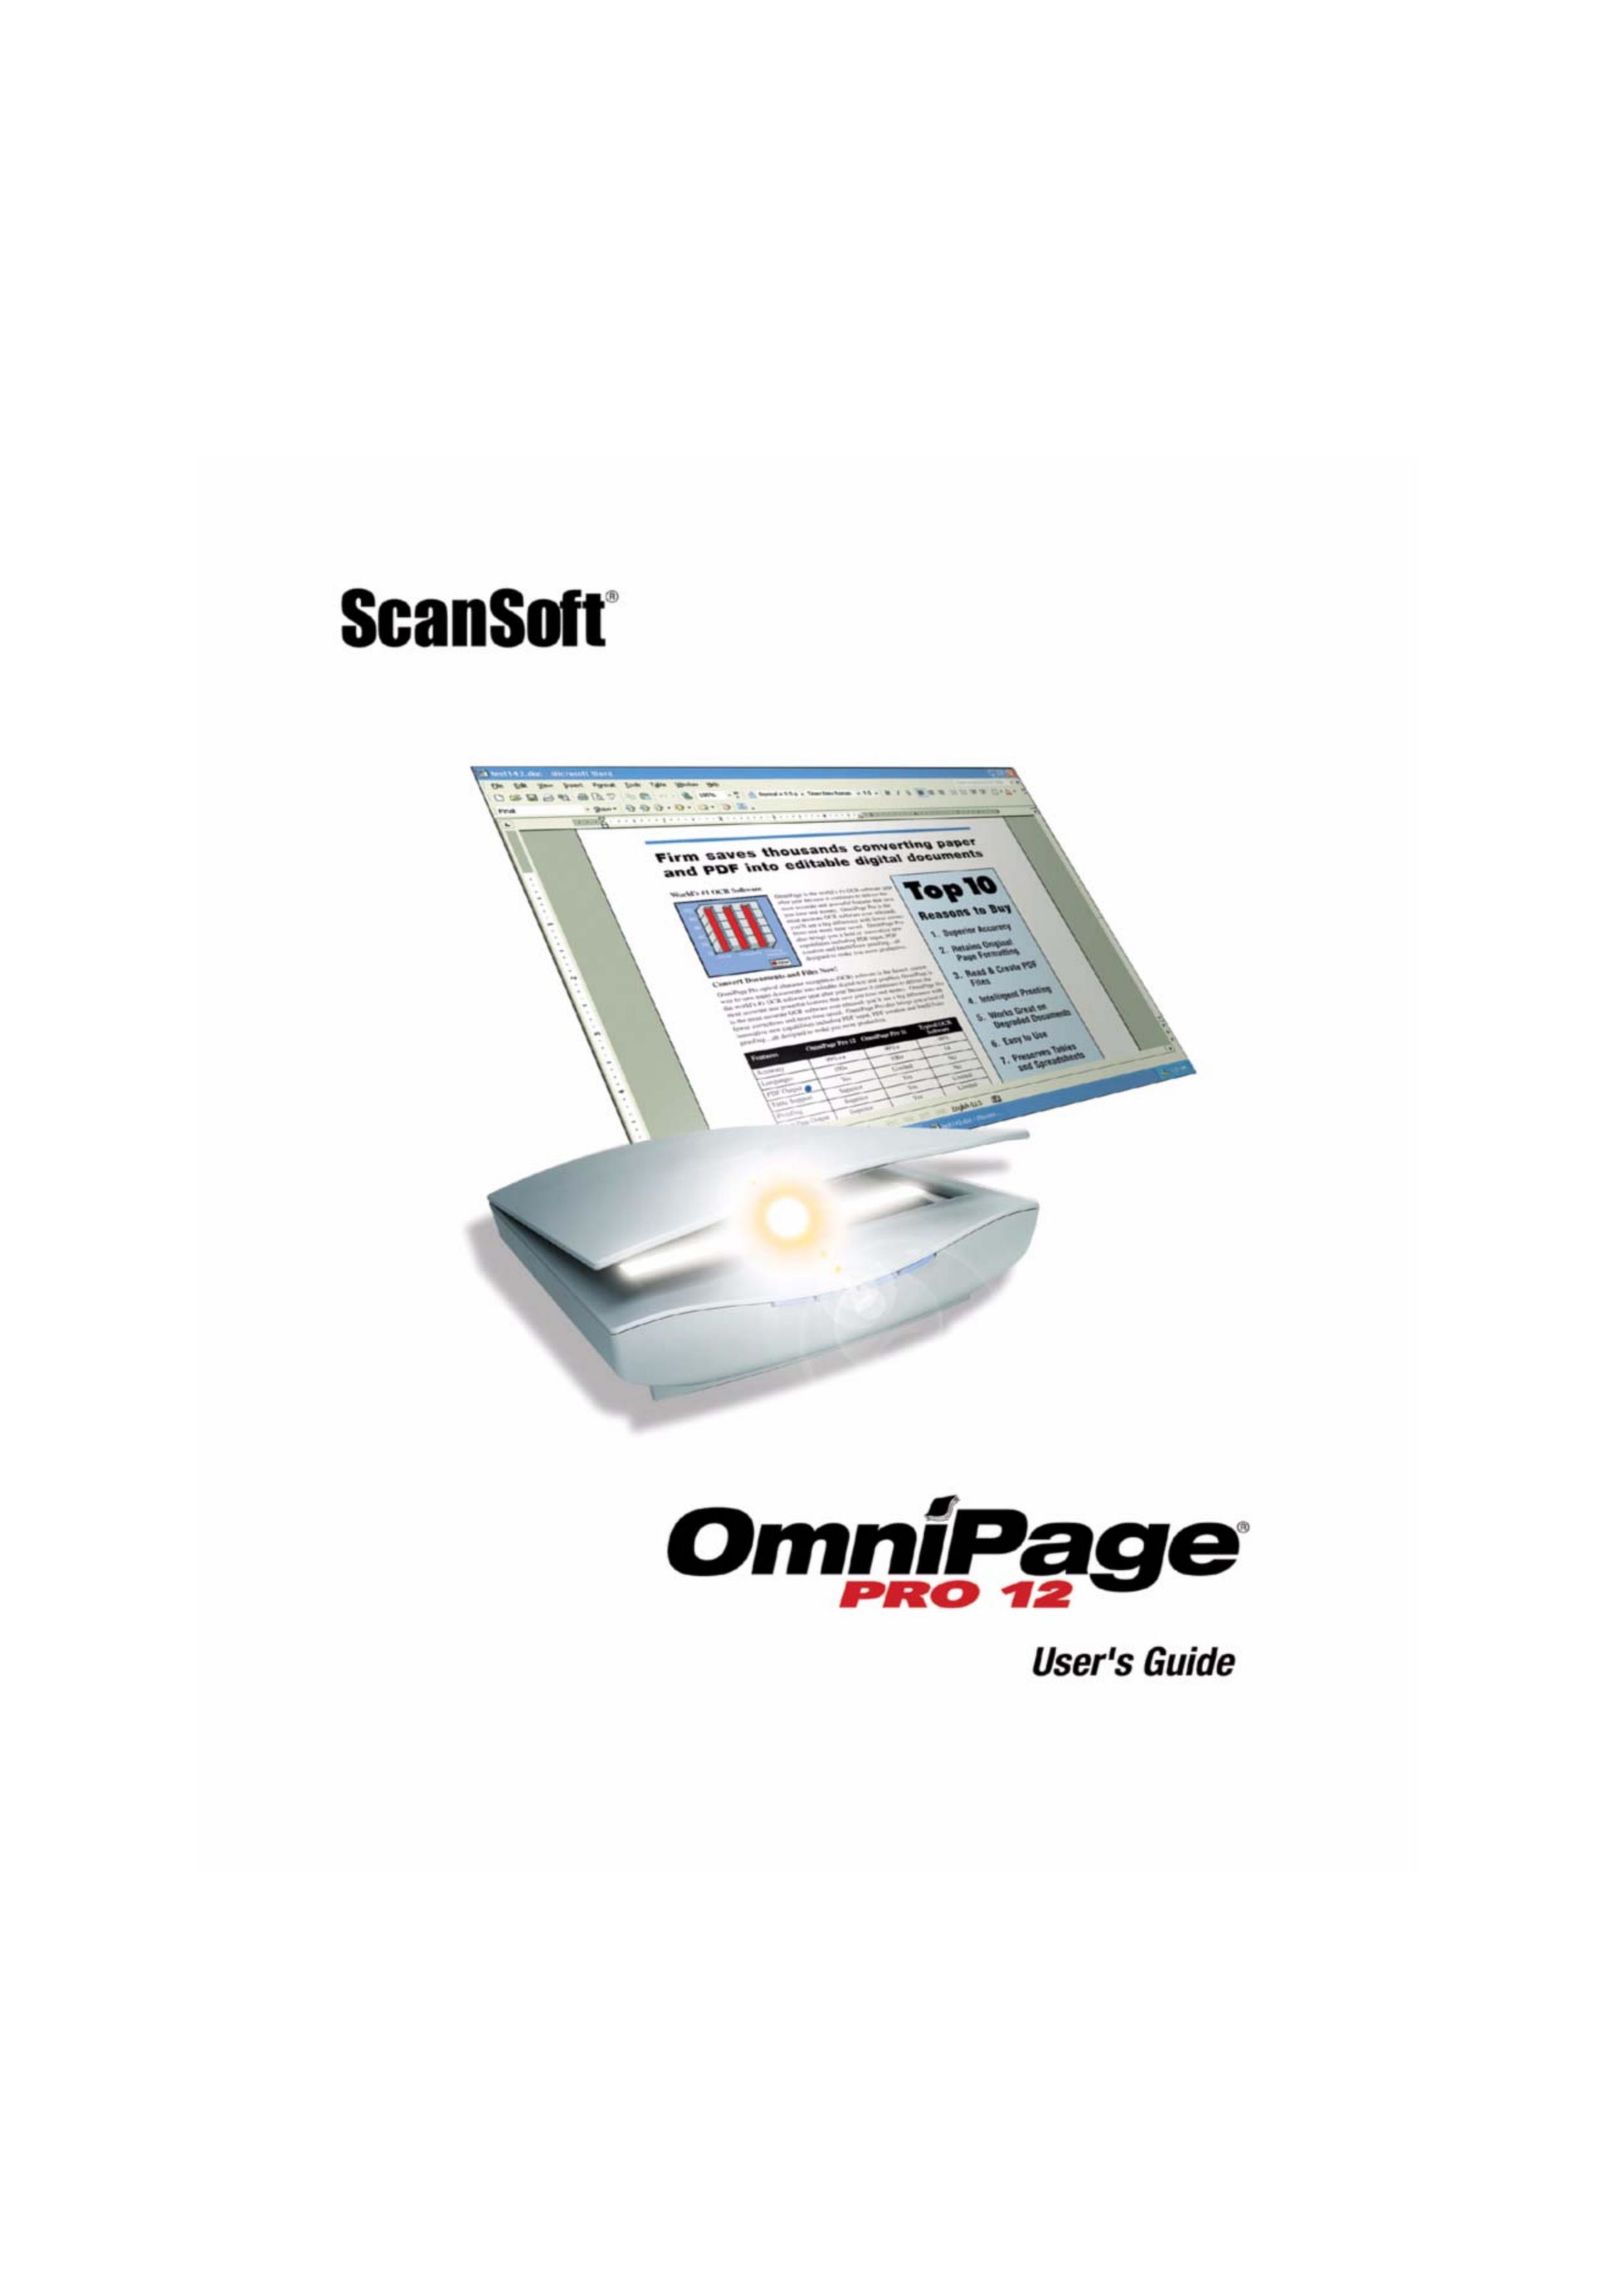 OmniWare Pro 12 ScanSoft Scanner User Manual